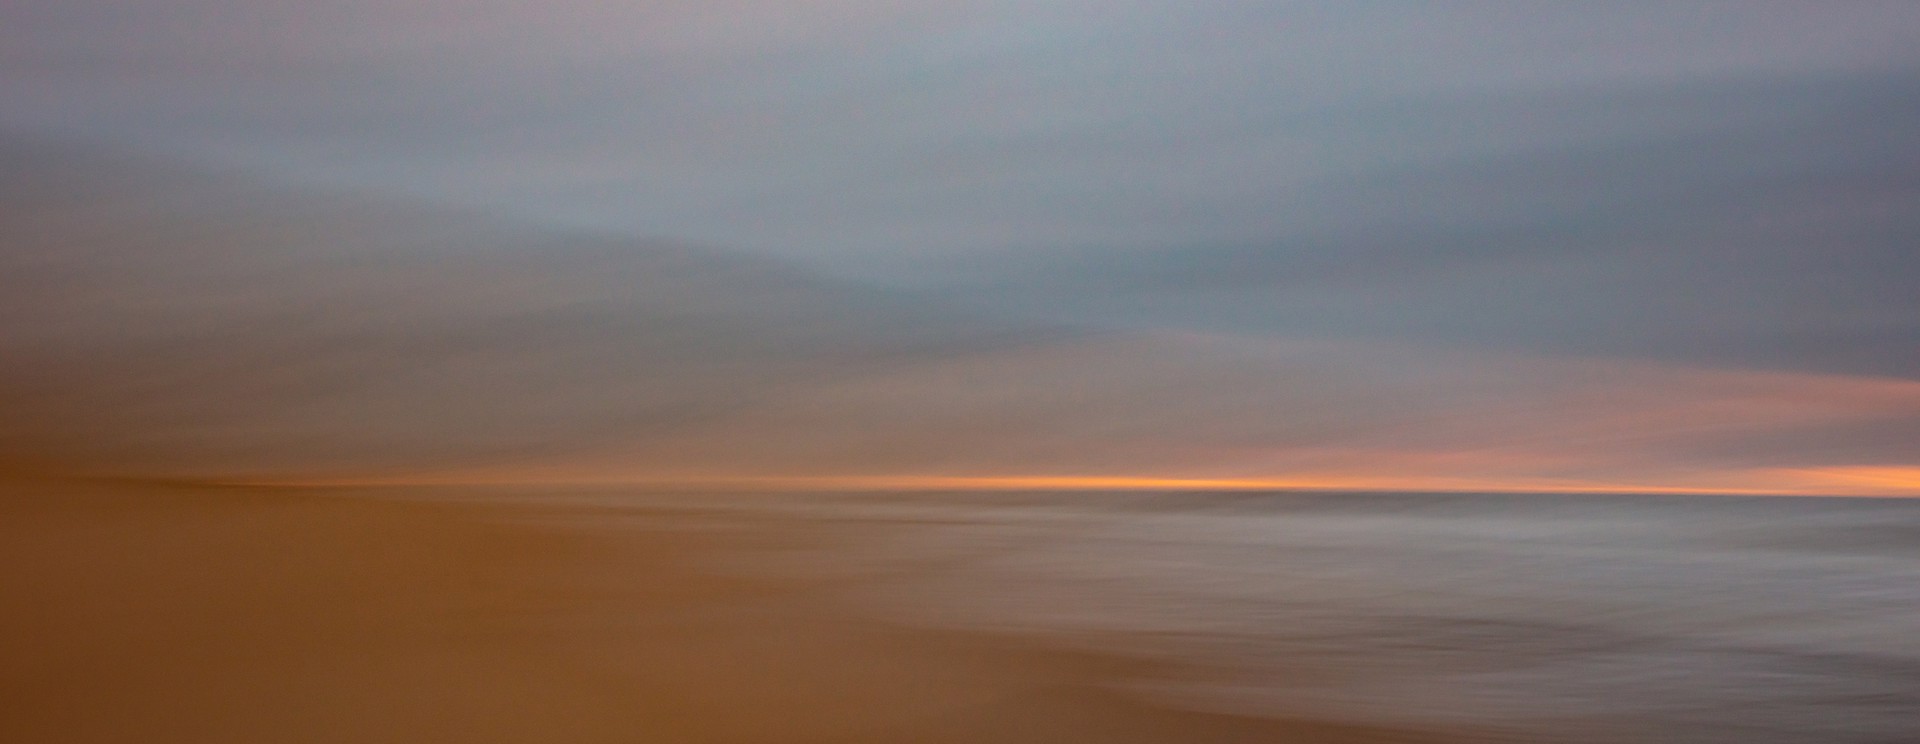 Amagansett Sunrise by ROB LANG